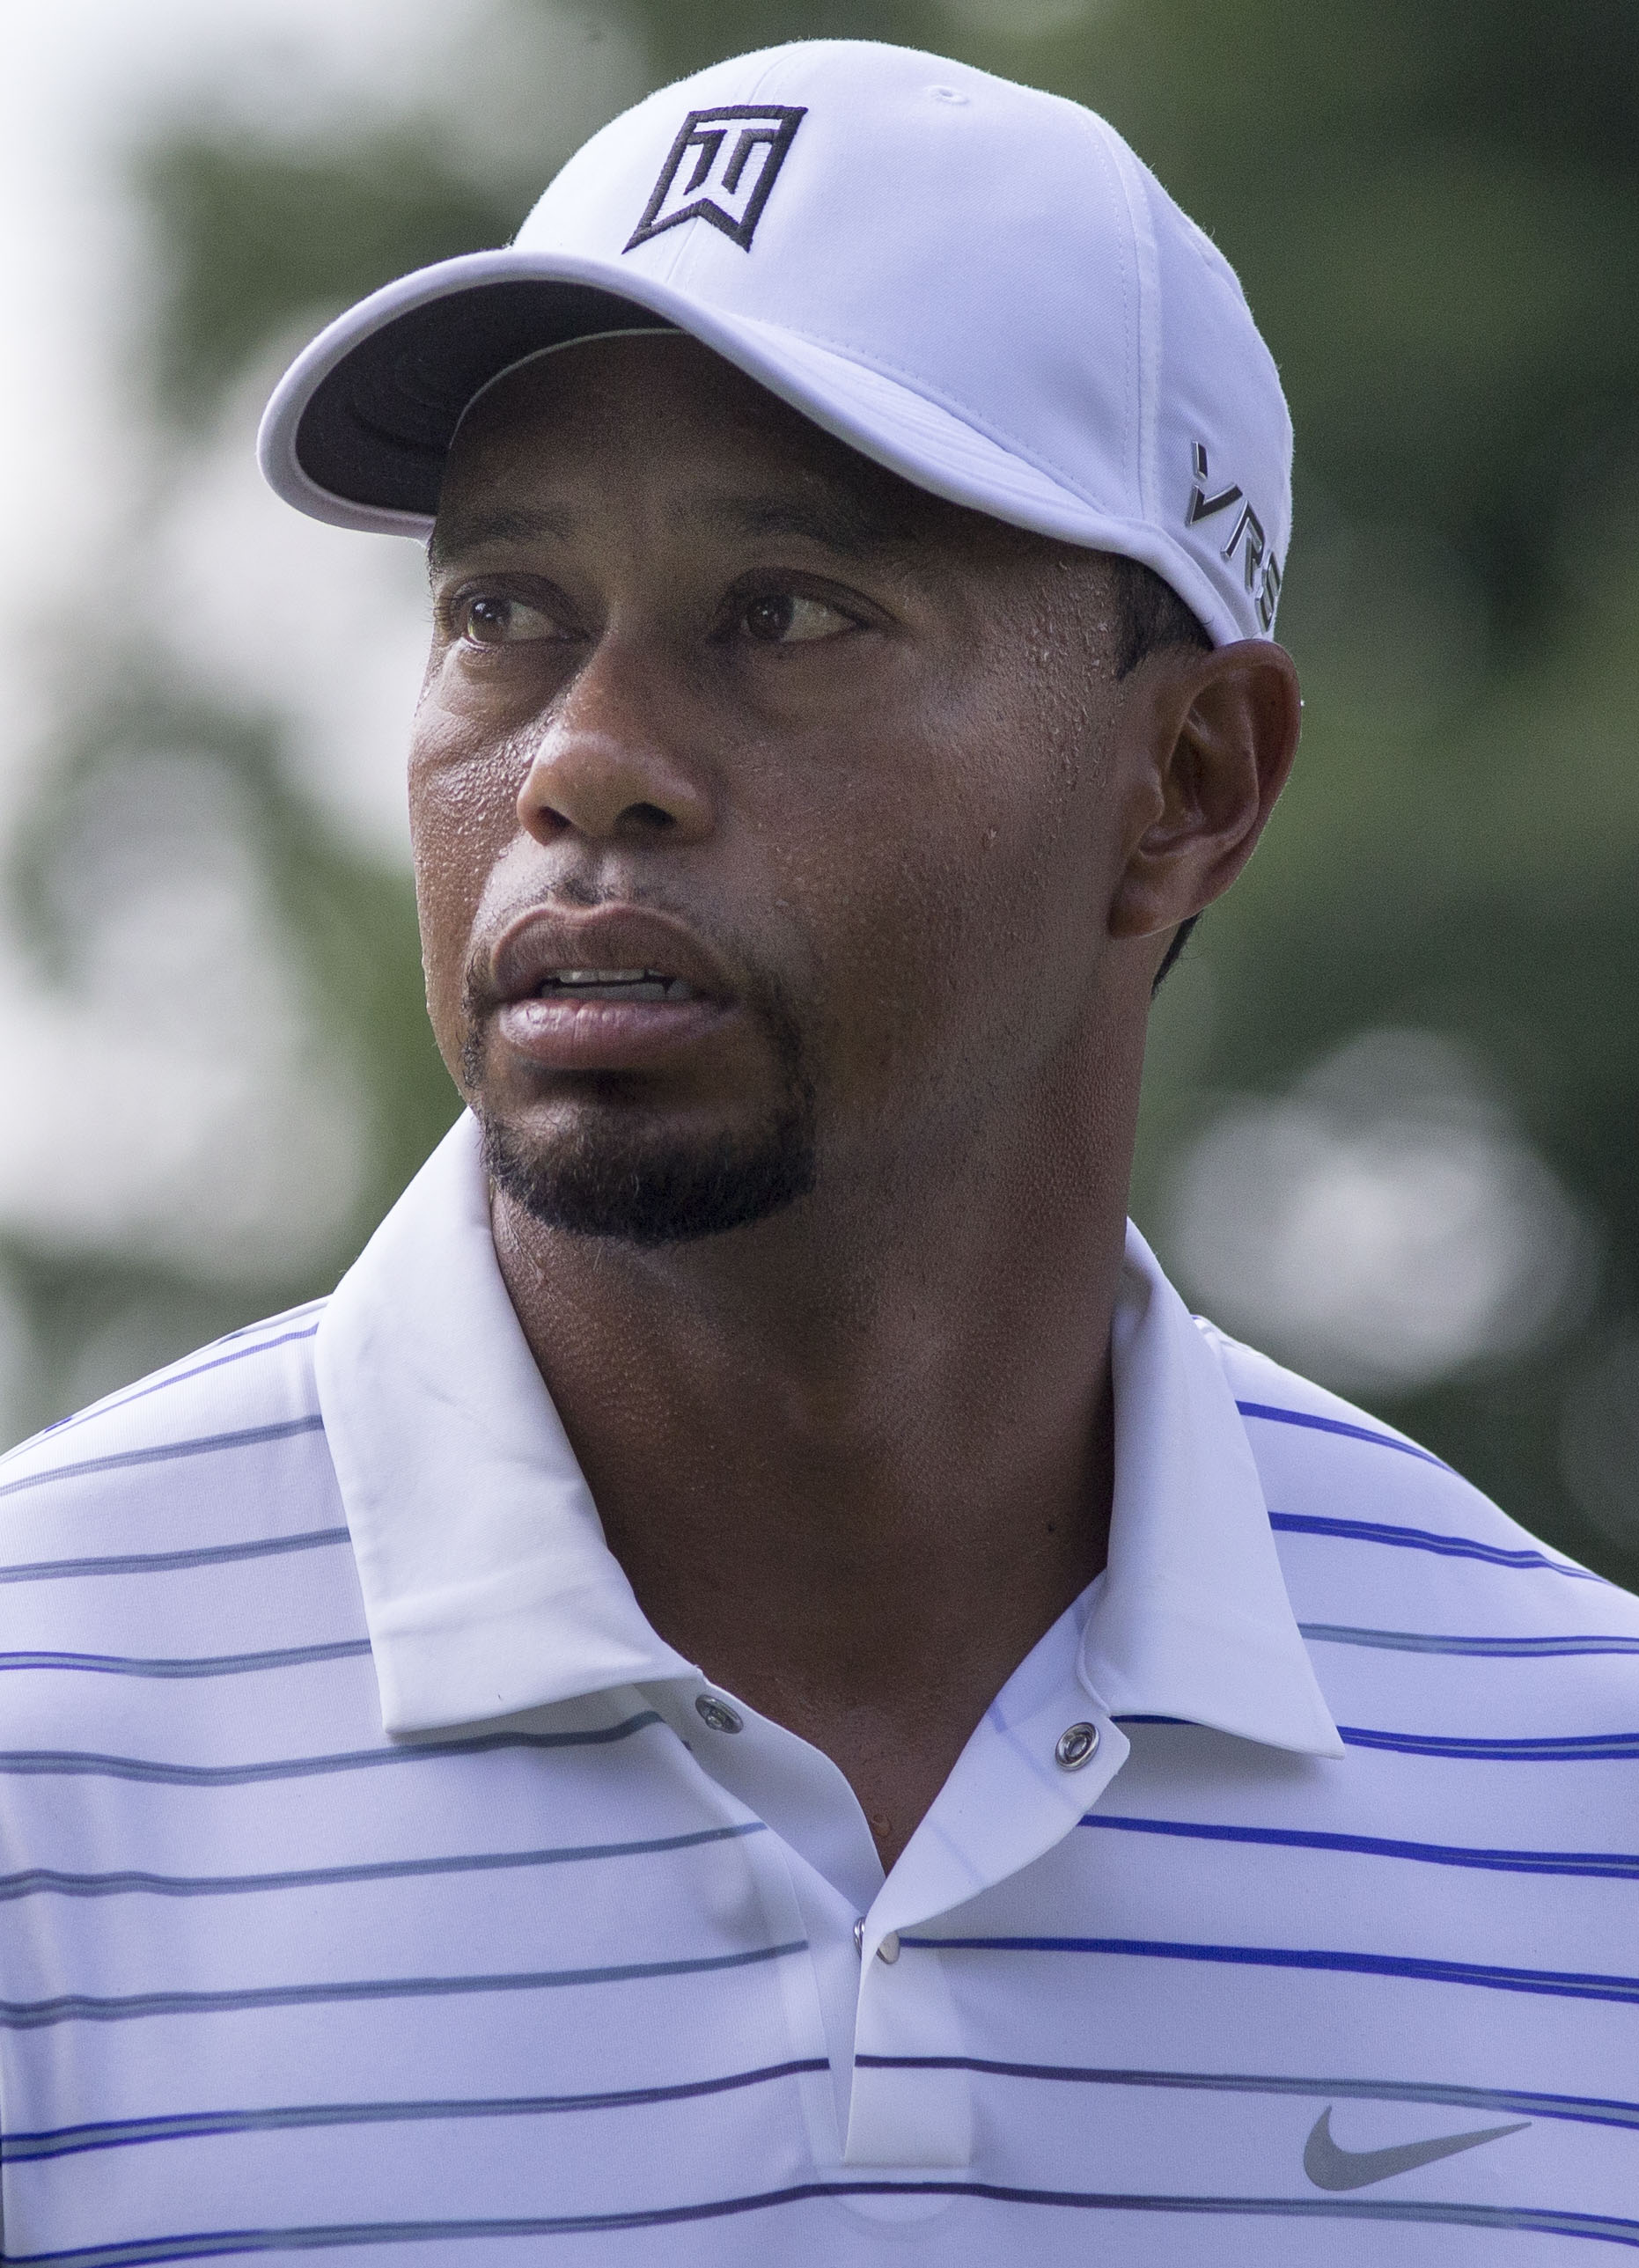 Tiger Woods photo #96201, Tiger Woods image